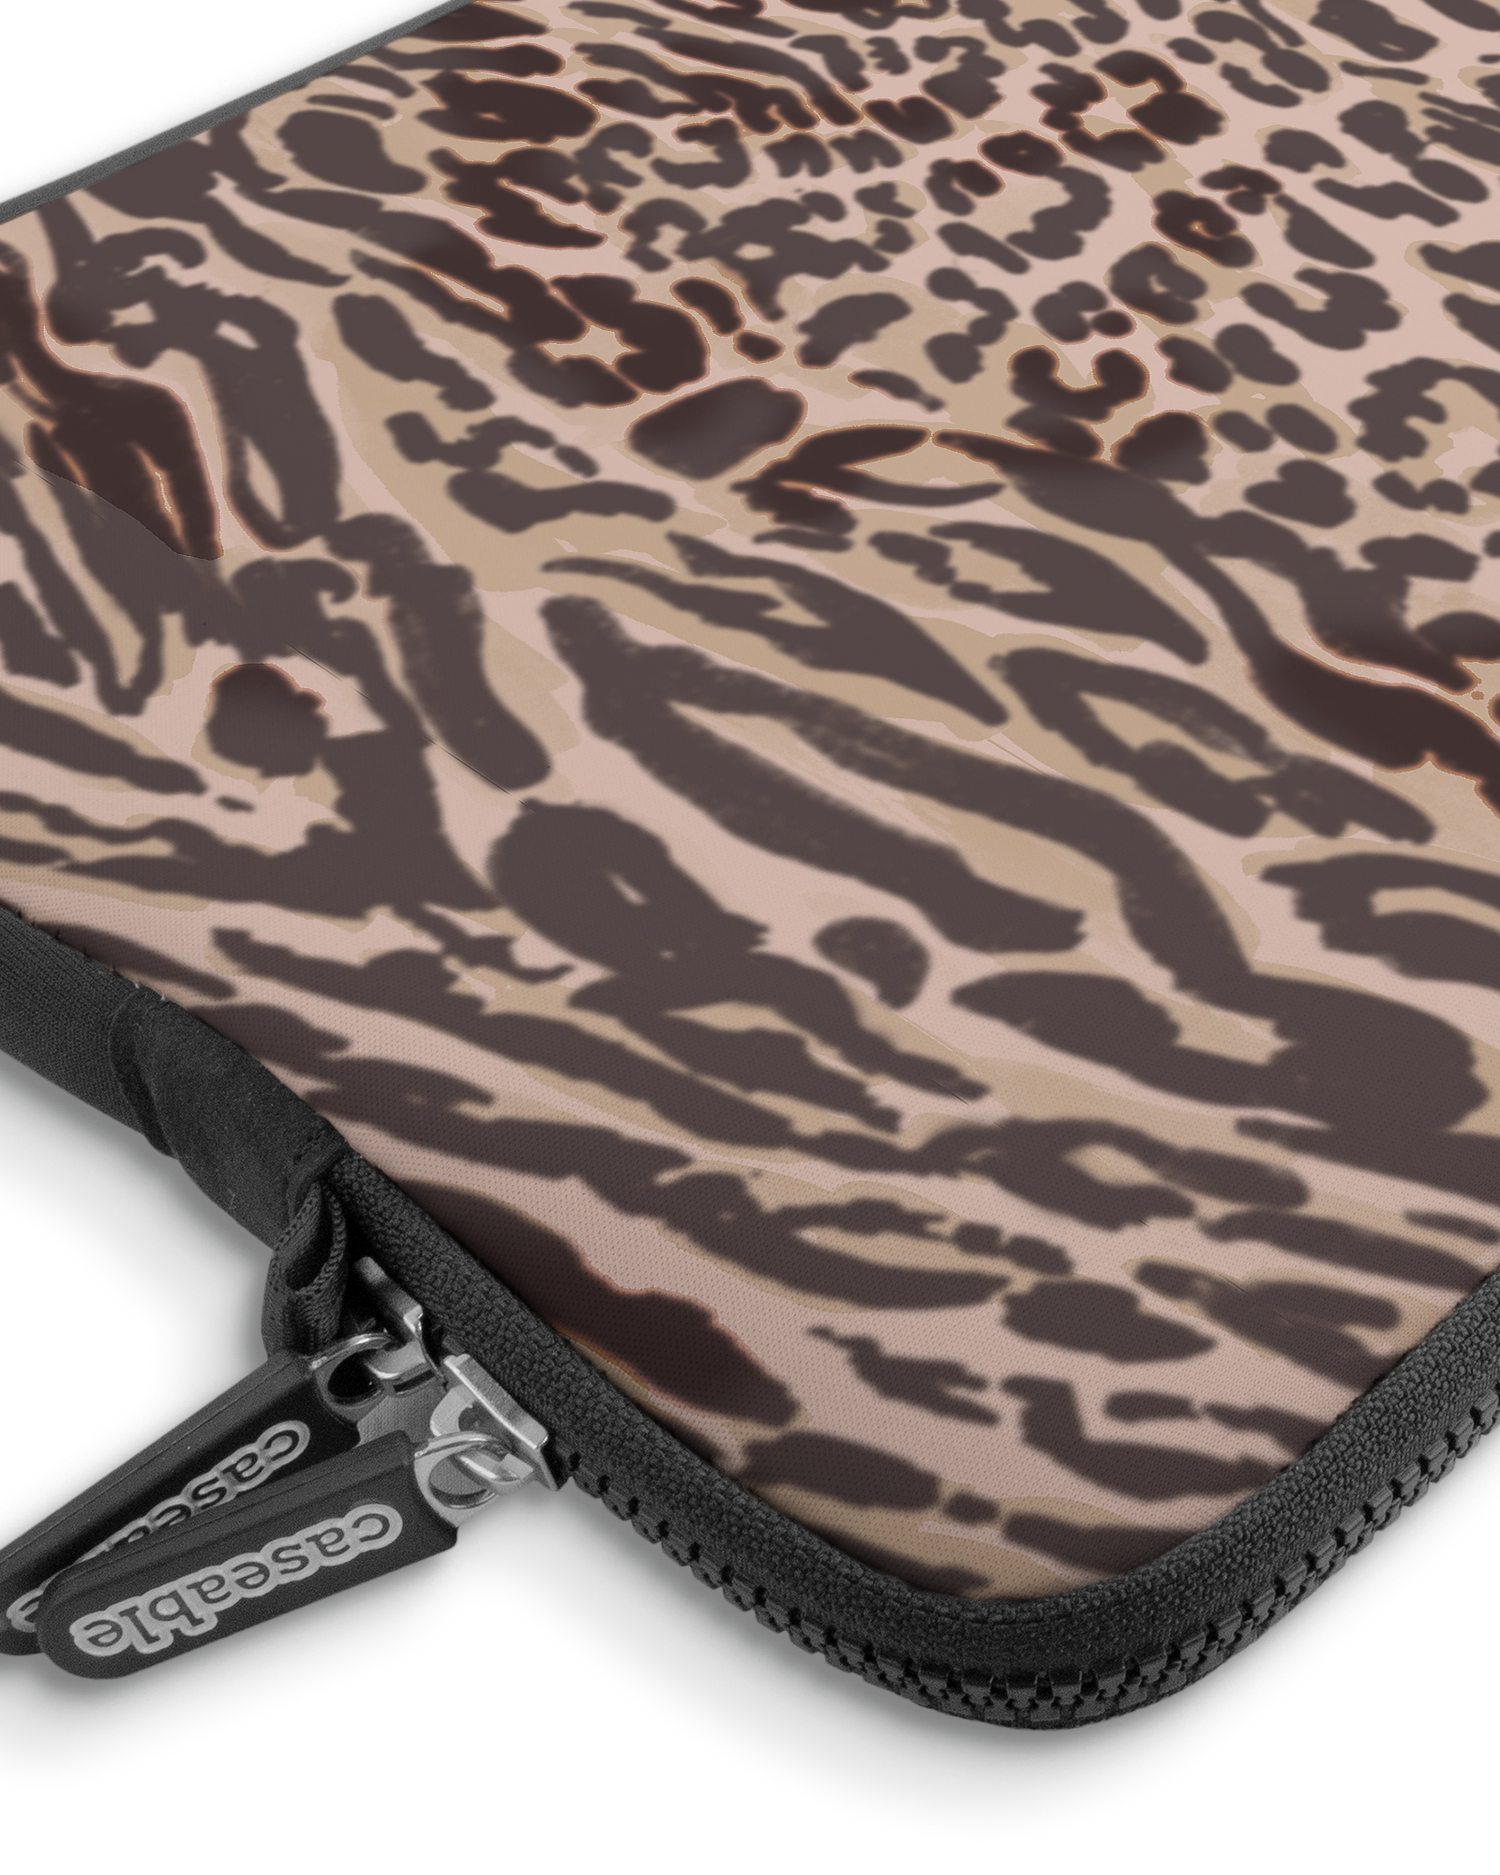 Animal Skin Tough Love Premium Laptop Bag 13-14 inch with device inside